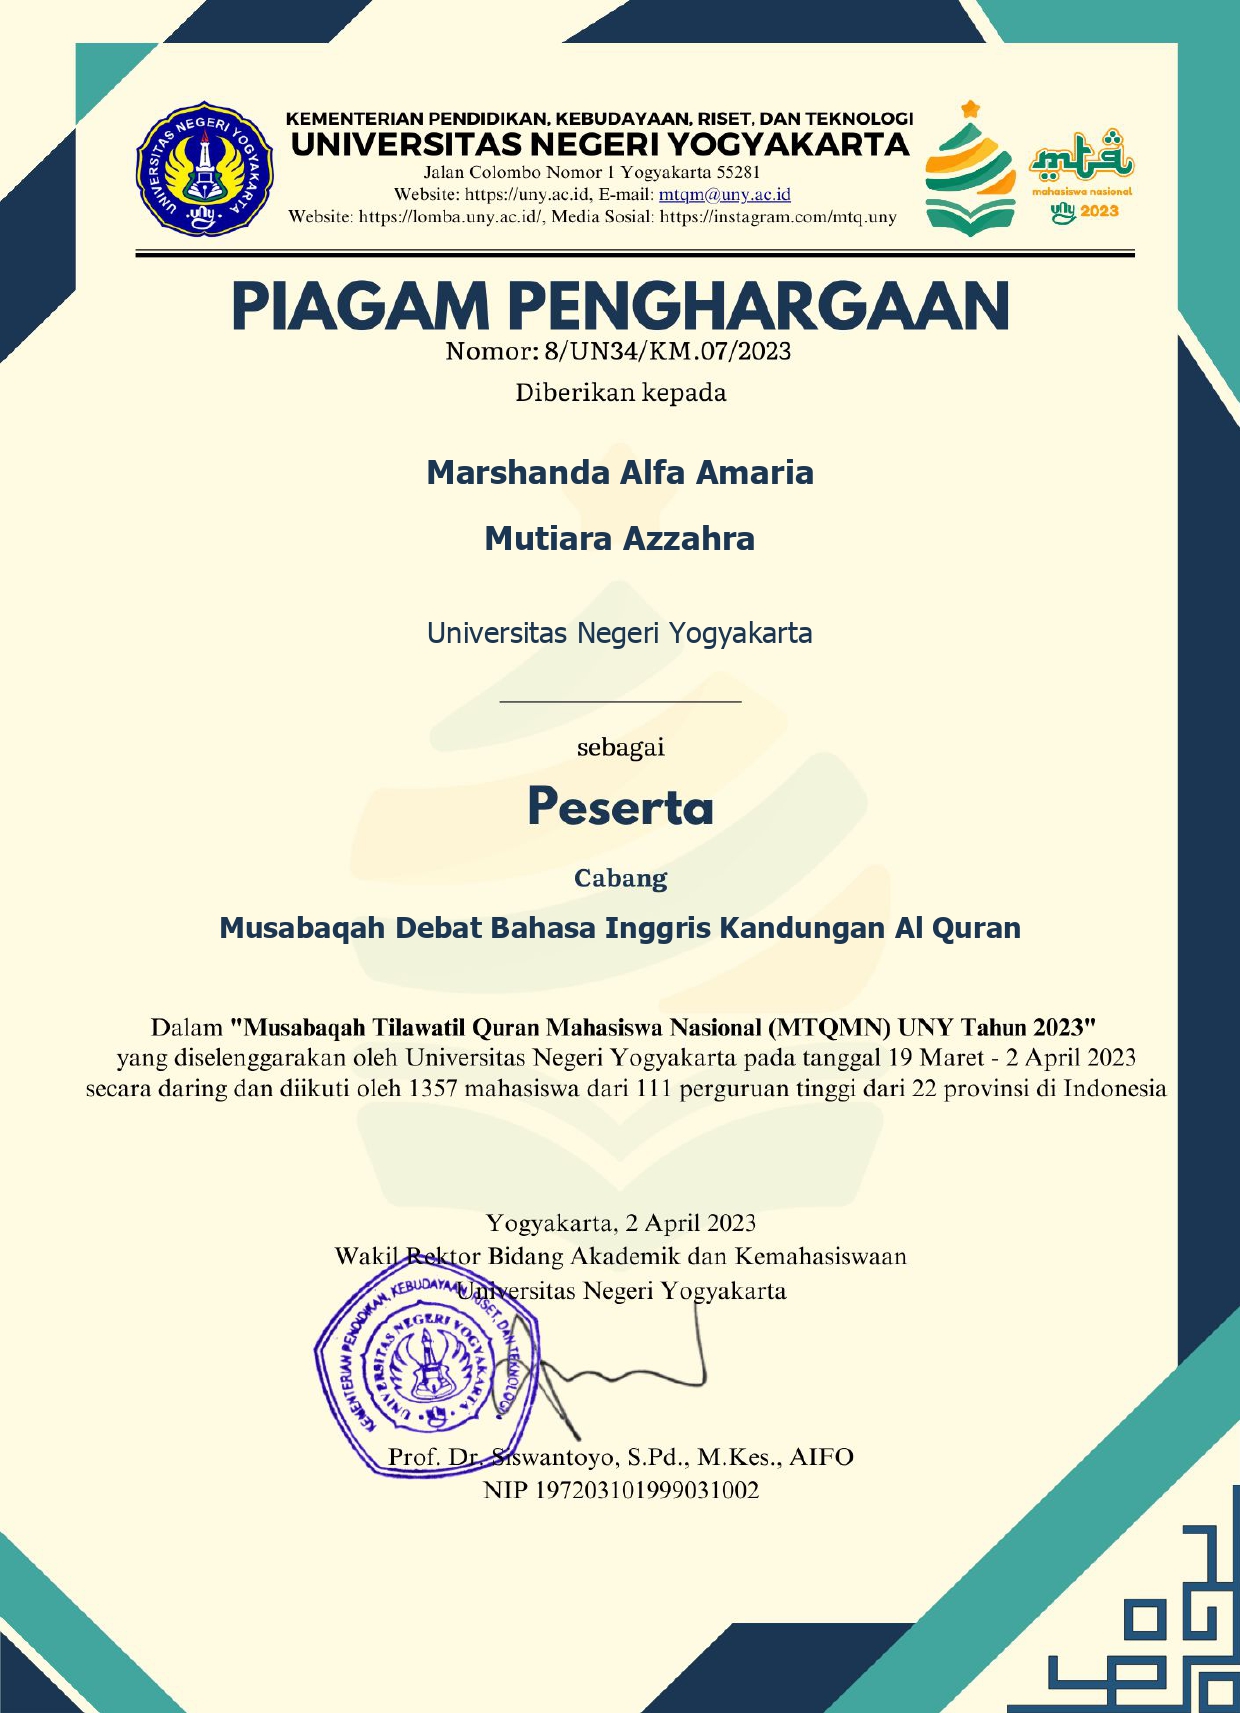 Foto MTQN Mahasiswa Nasional Universitas Negeri Yogyakarta #3 Tahun 2023